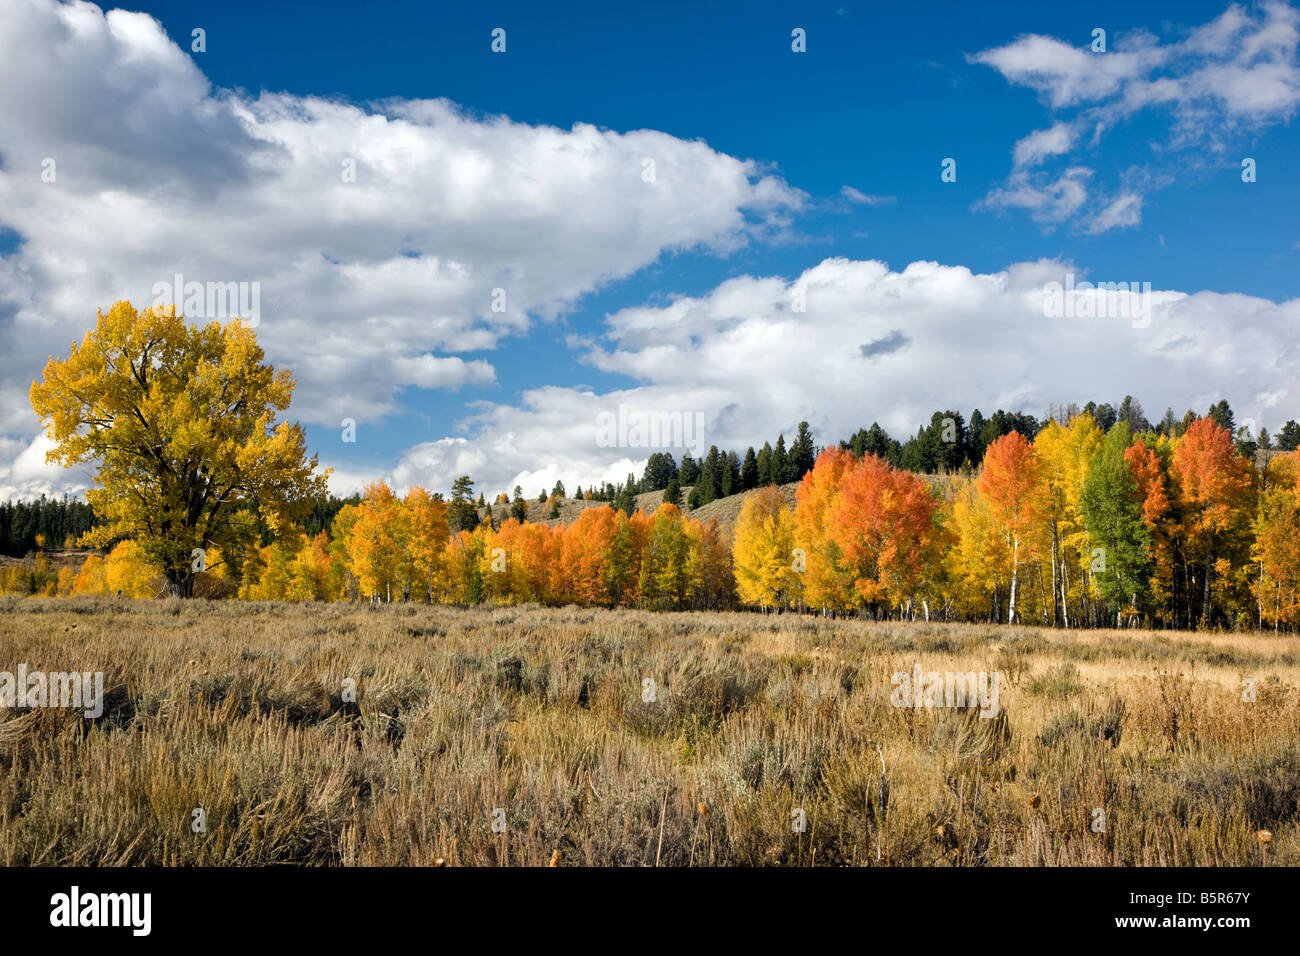 Aspen trees in autumn color, Oxbow Bend, Grand Teton National Park, Wyoming, USA Stock Photo